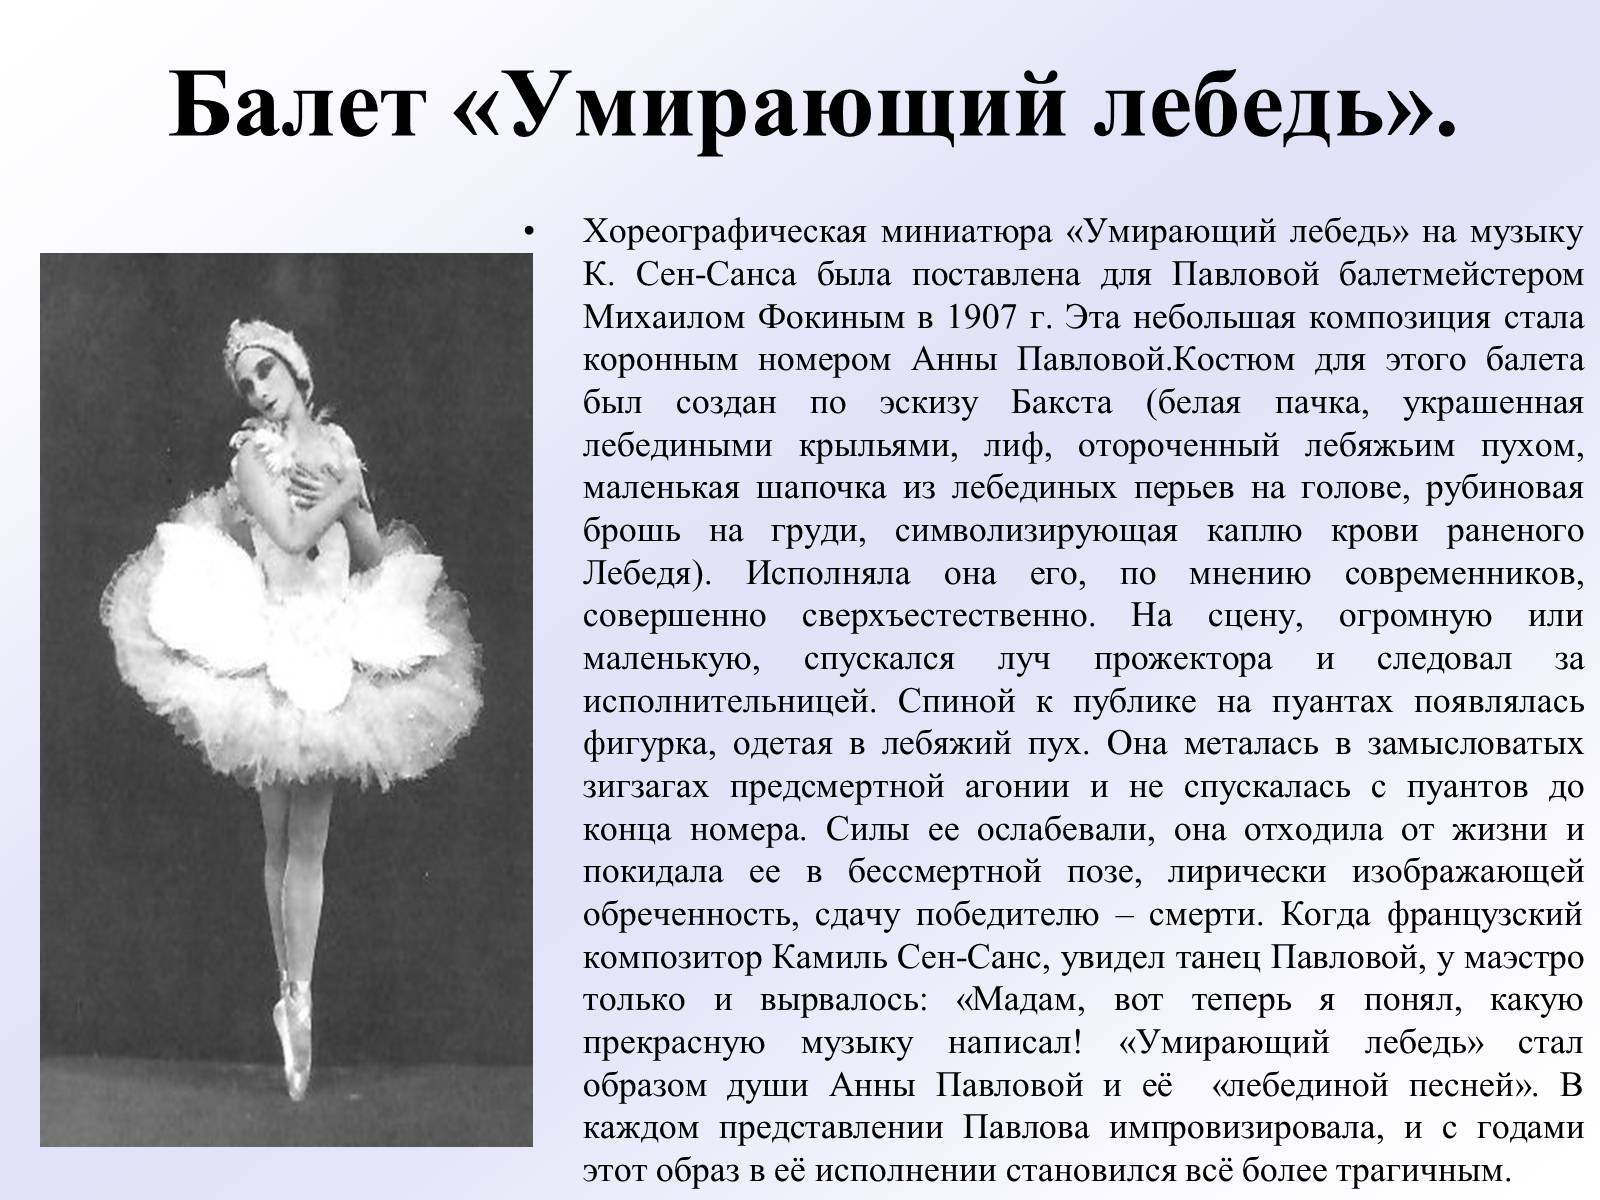 История создания балета